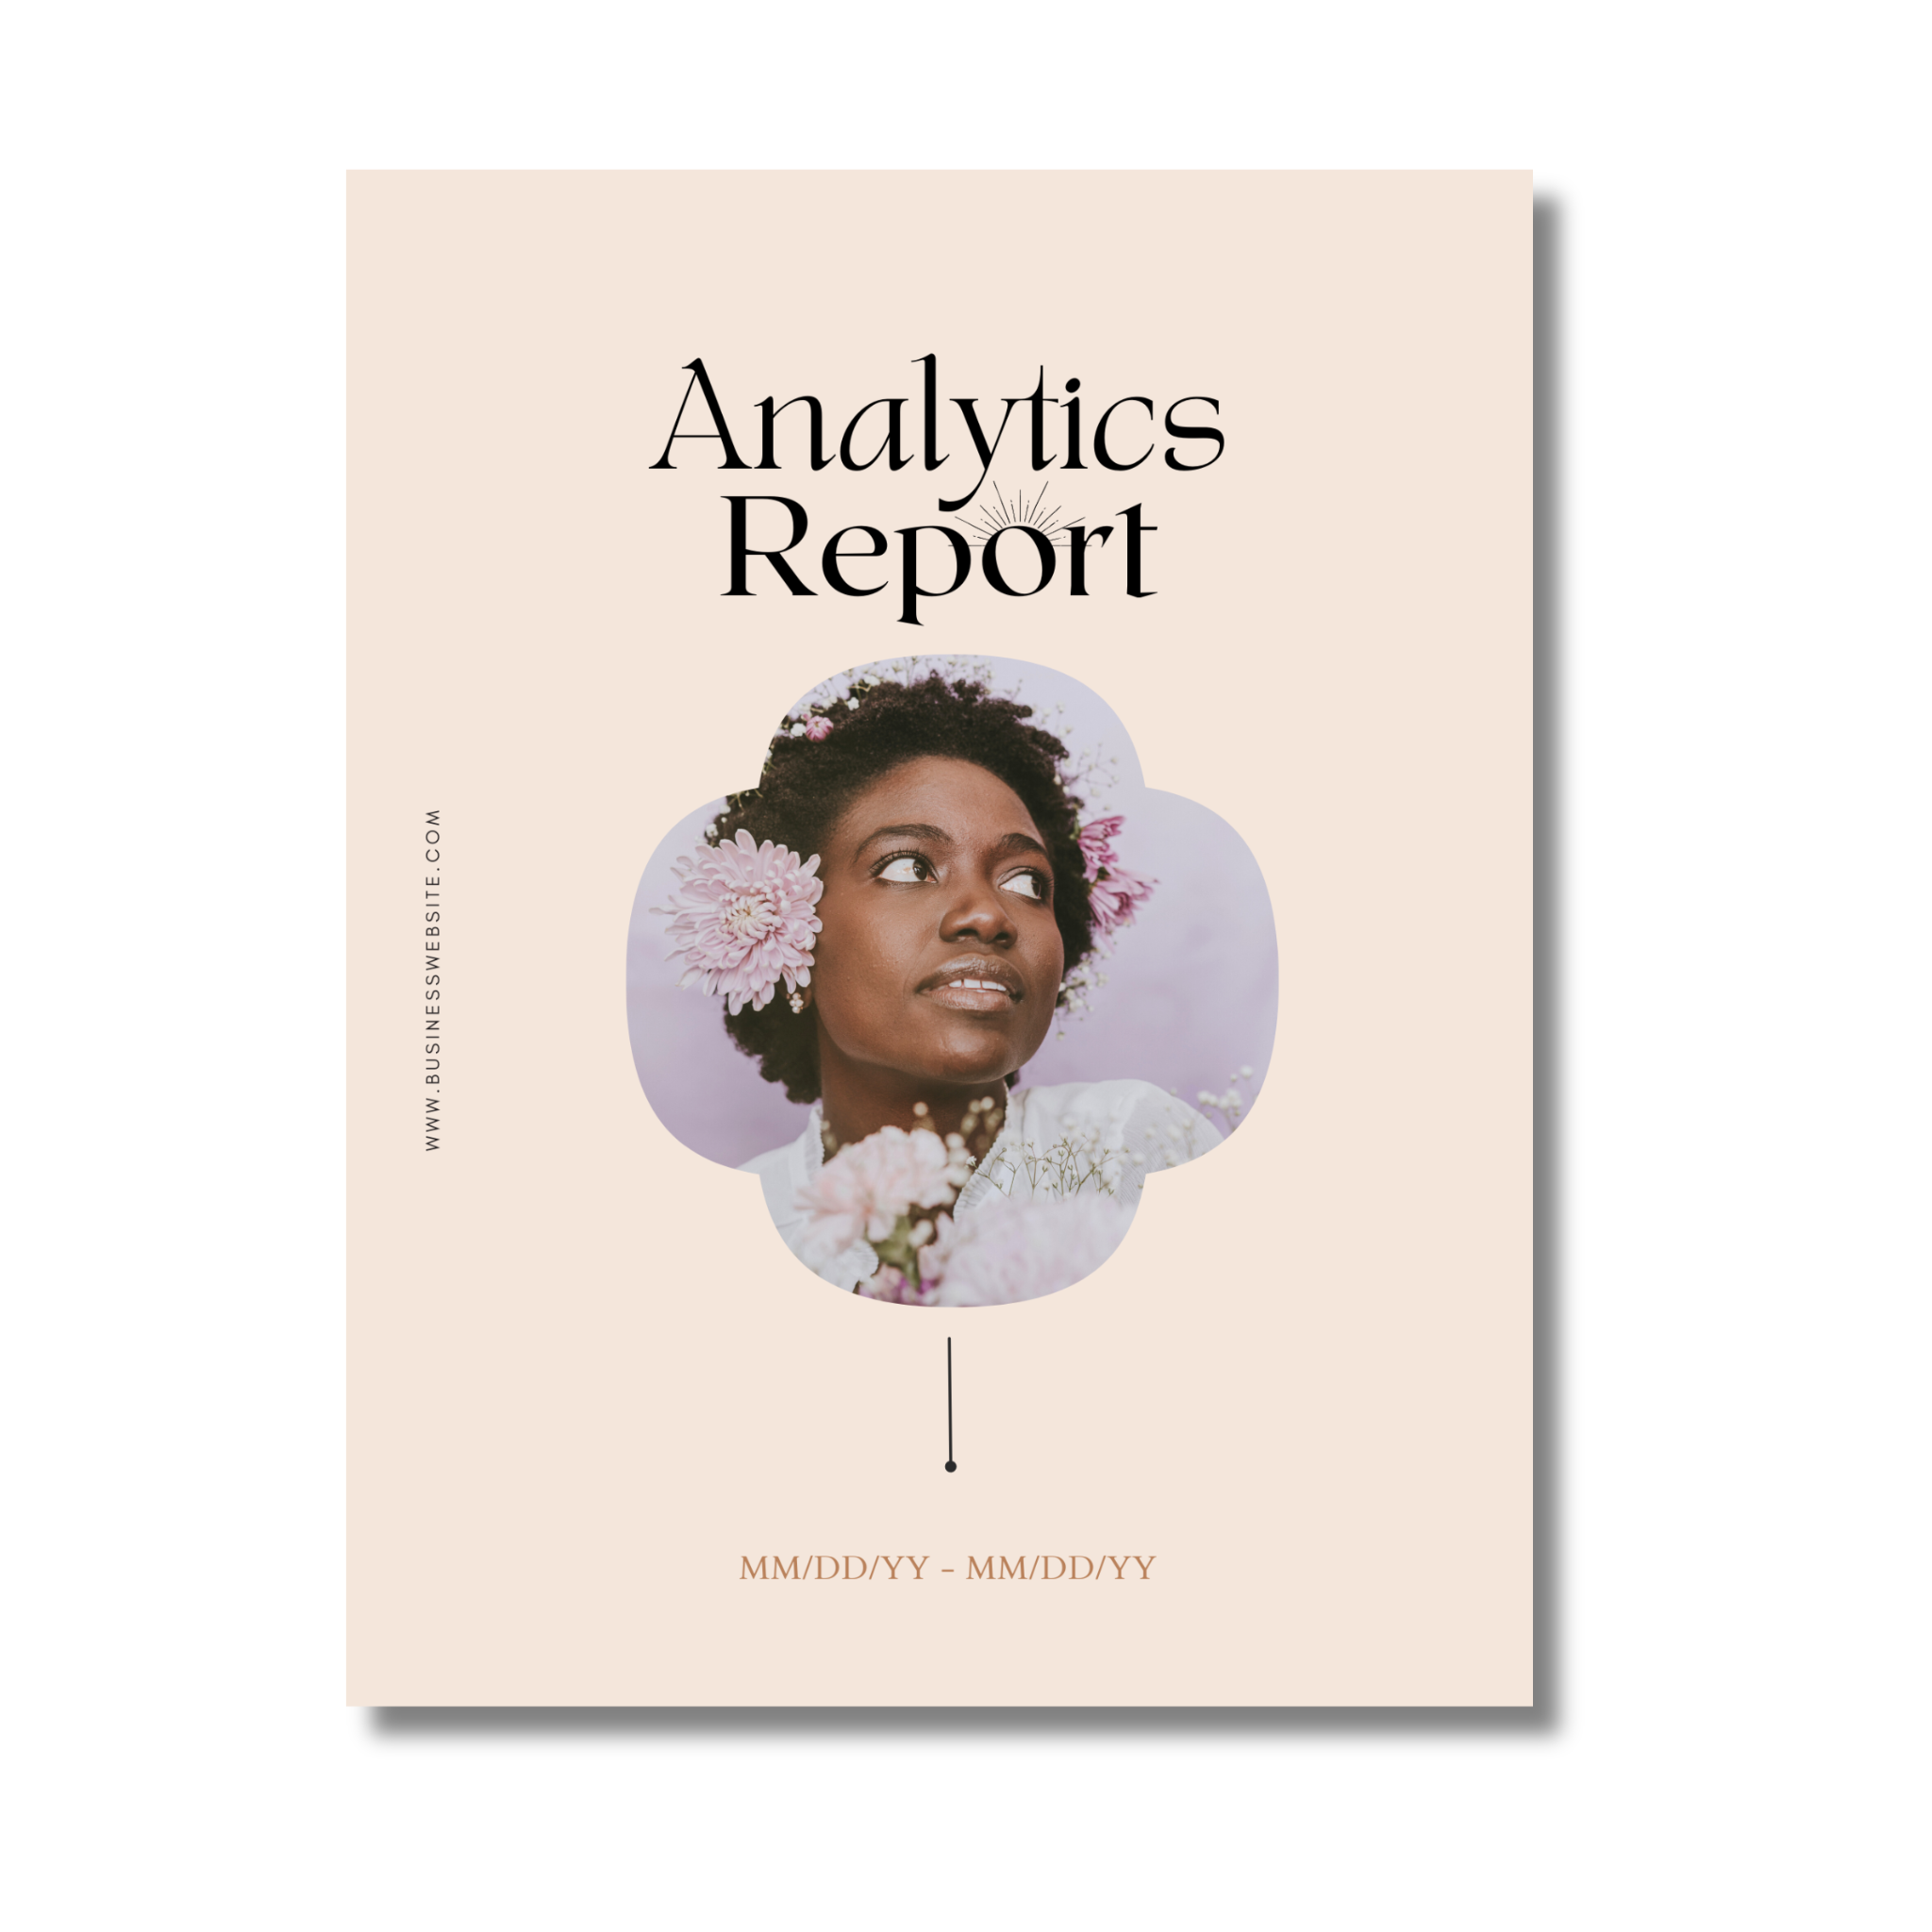 Analytics Report Template - Delicate & Dreamy